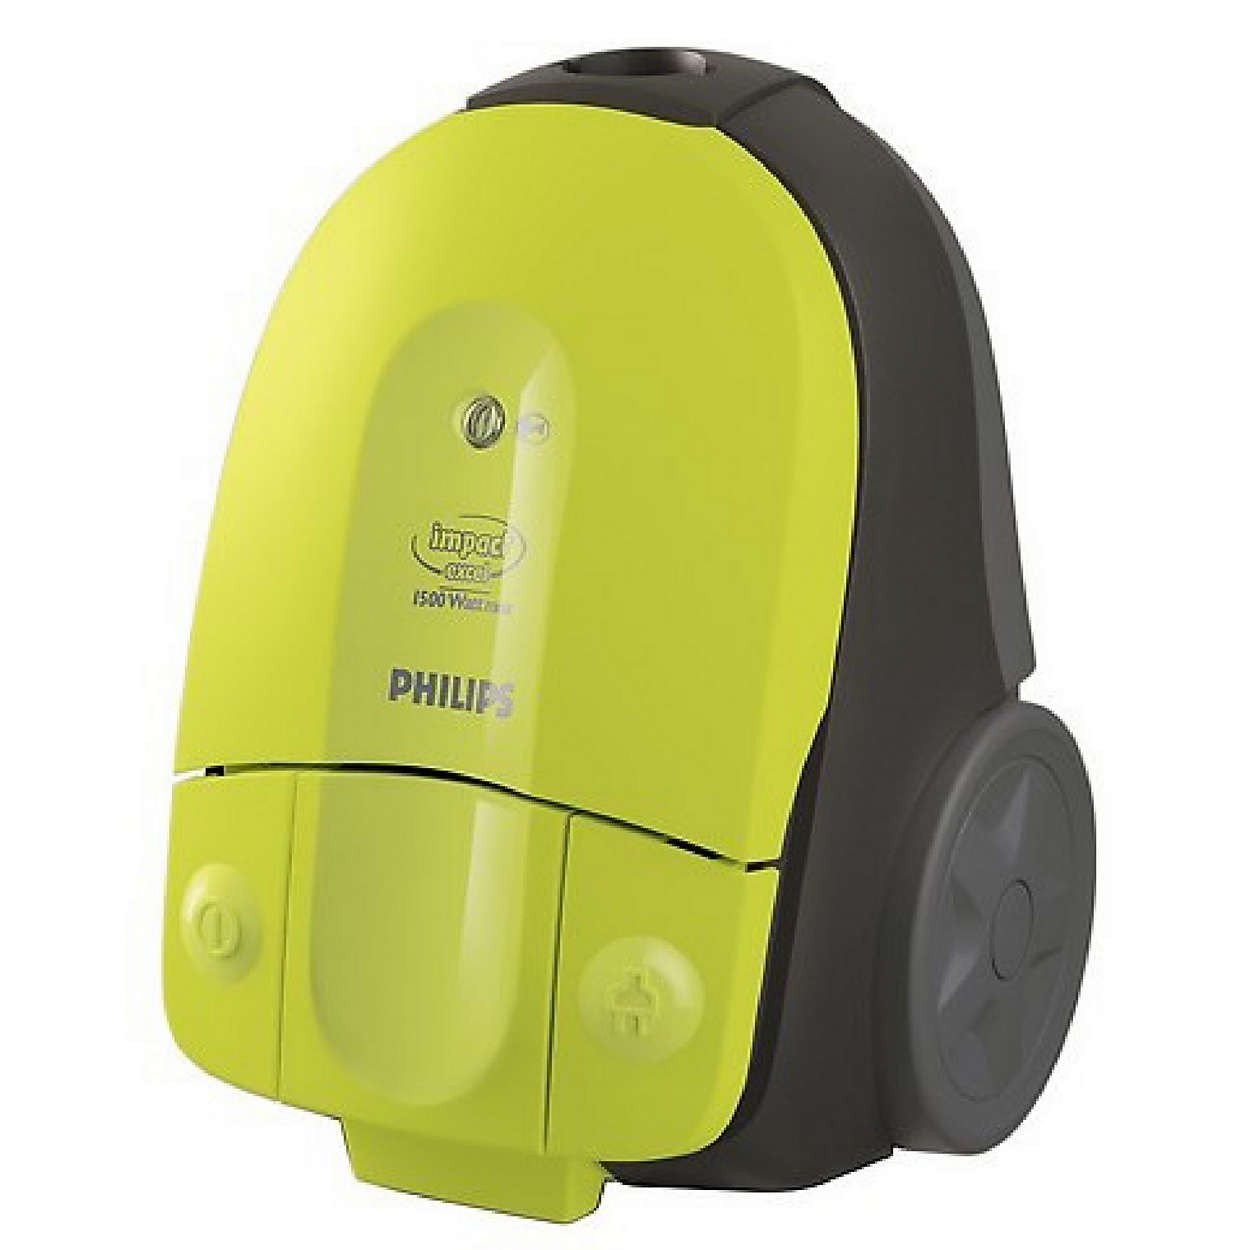 Aspirapolvere Philips Impact Excel FC 8390/01 colore verde 1500W